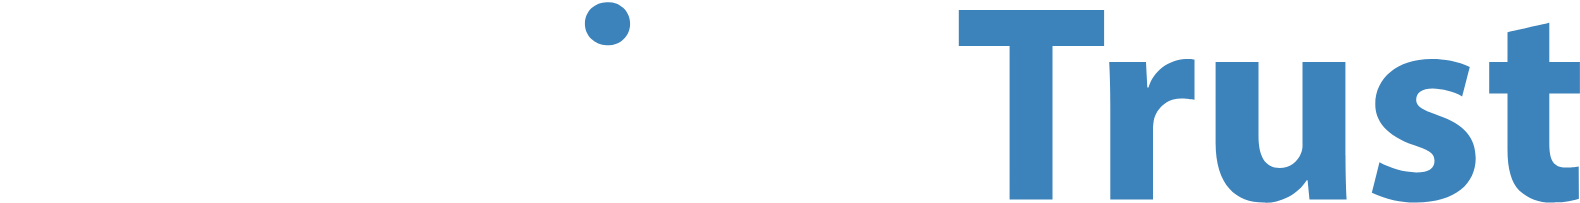 NetLink Trust Logo groß für dunkle Hintergründe (transparentes PNG)